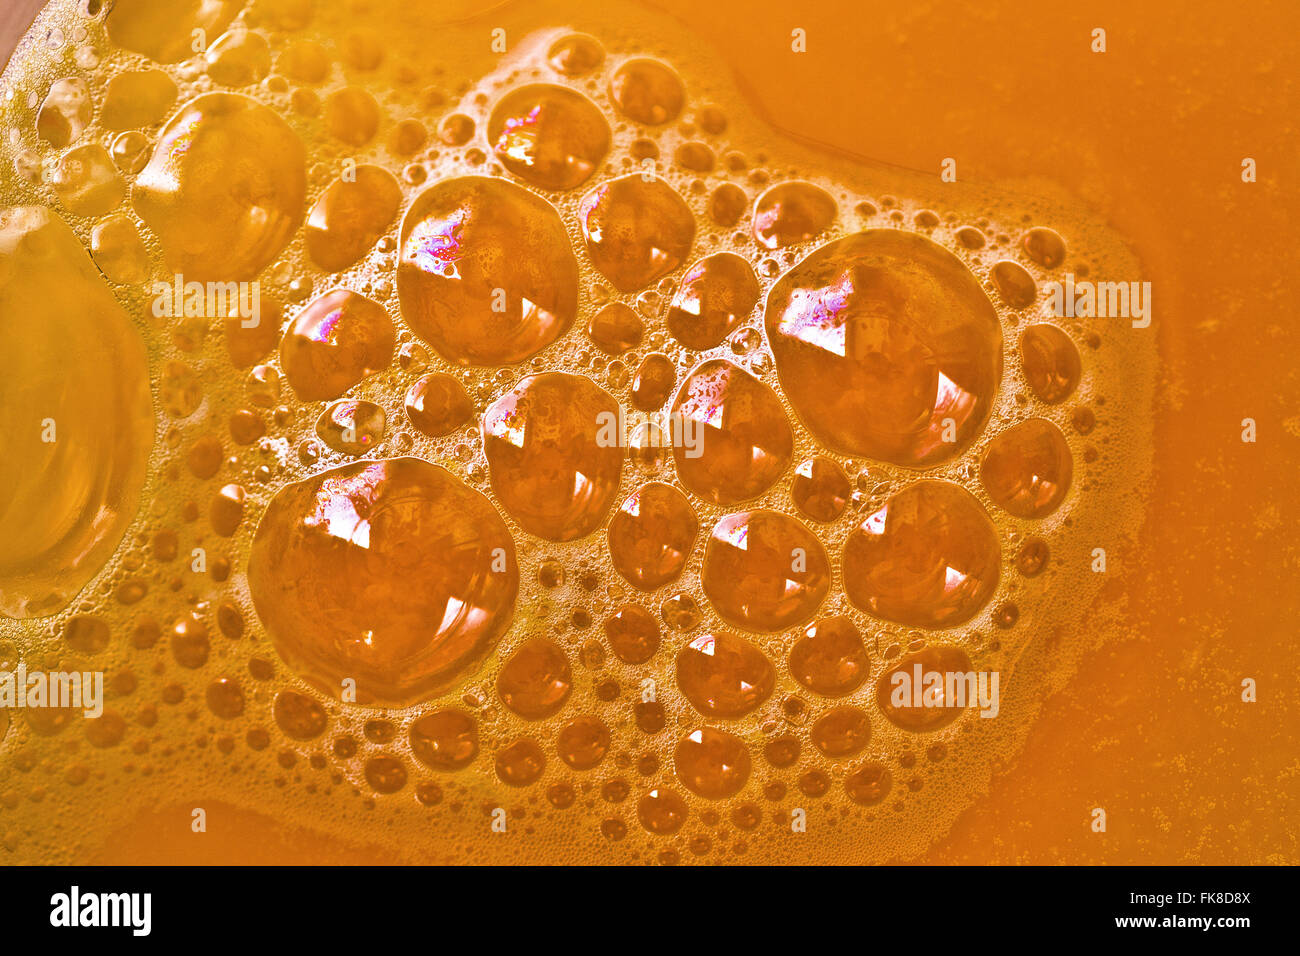 Indústria de suco de laranja Stock Photo